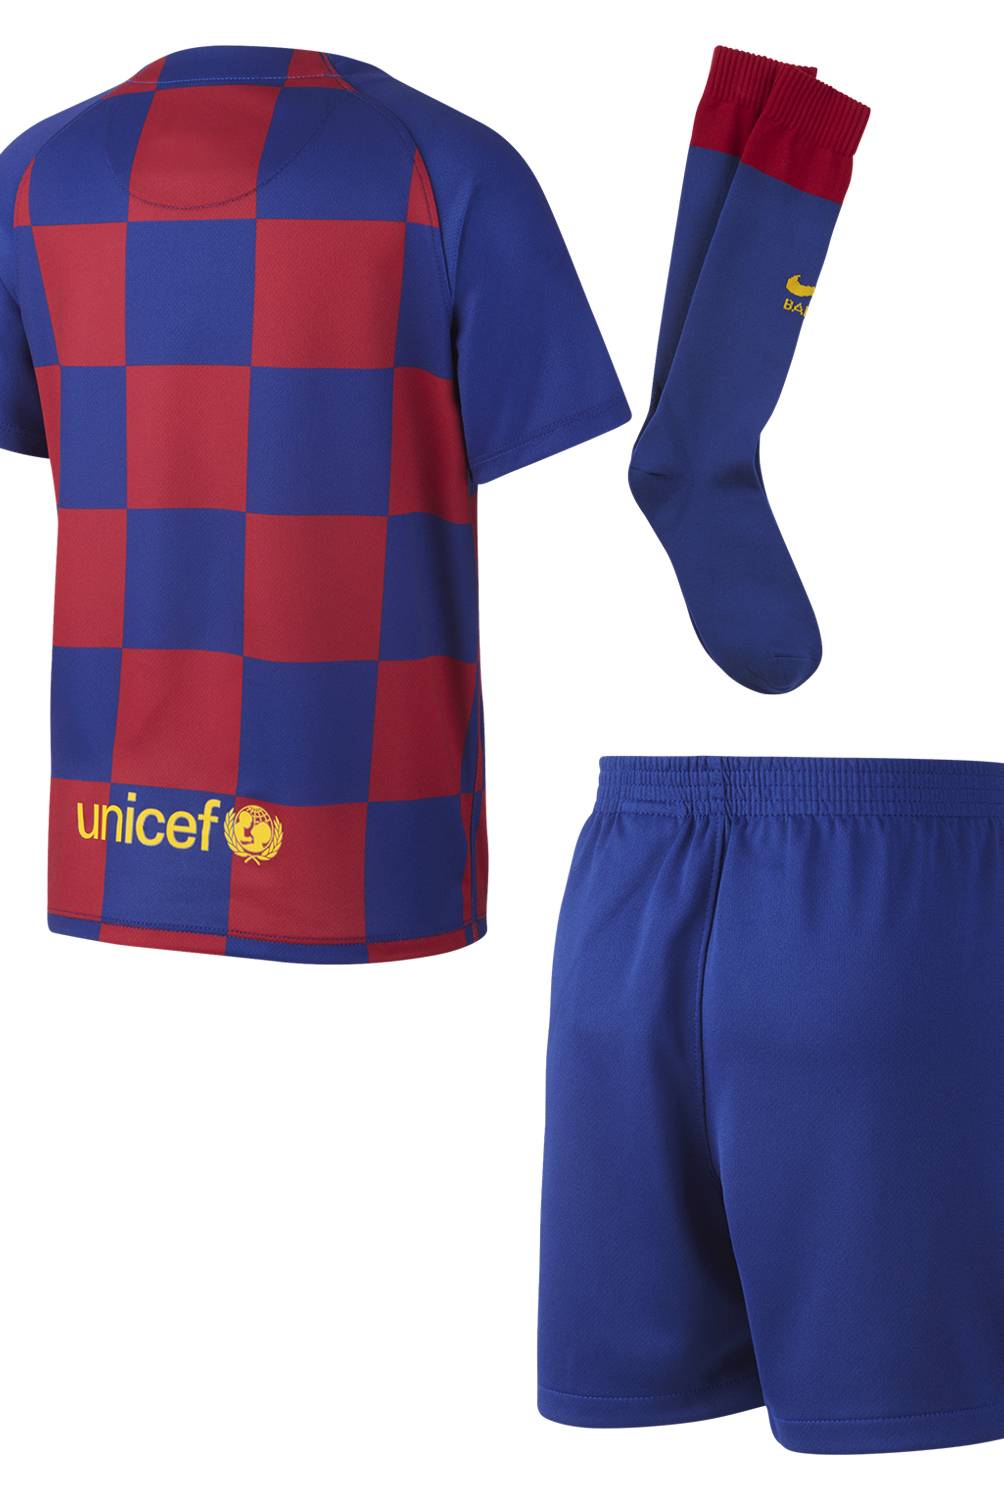 Nike - Nike Kit de Futbol Niño FC Barcelona